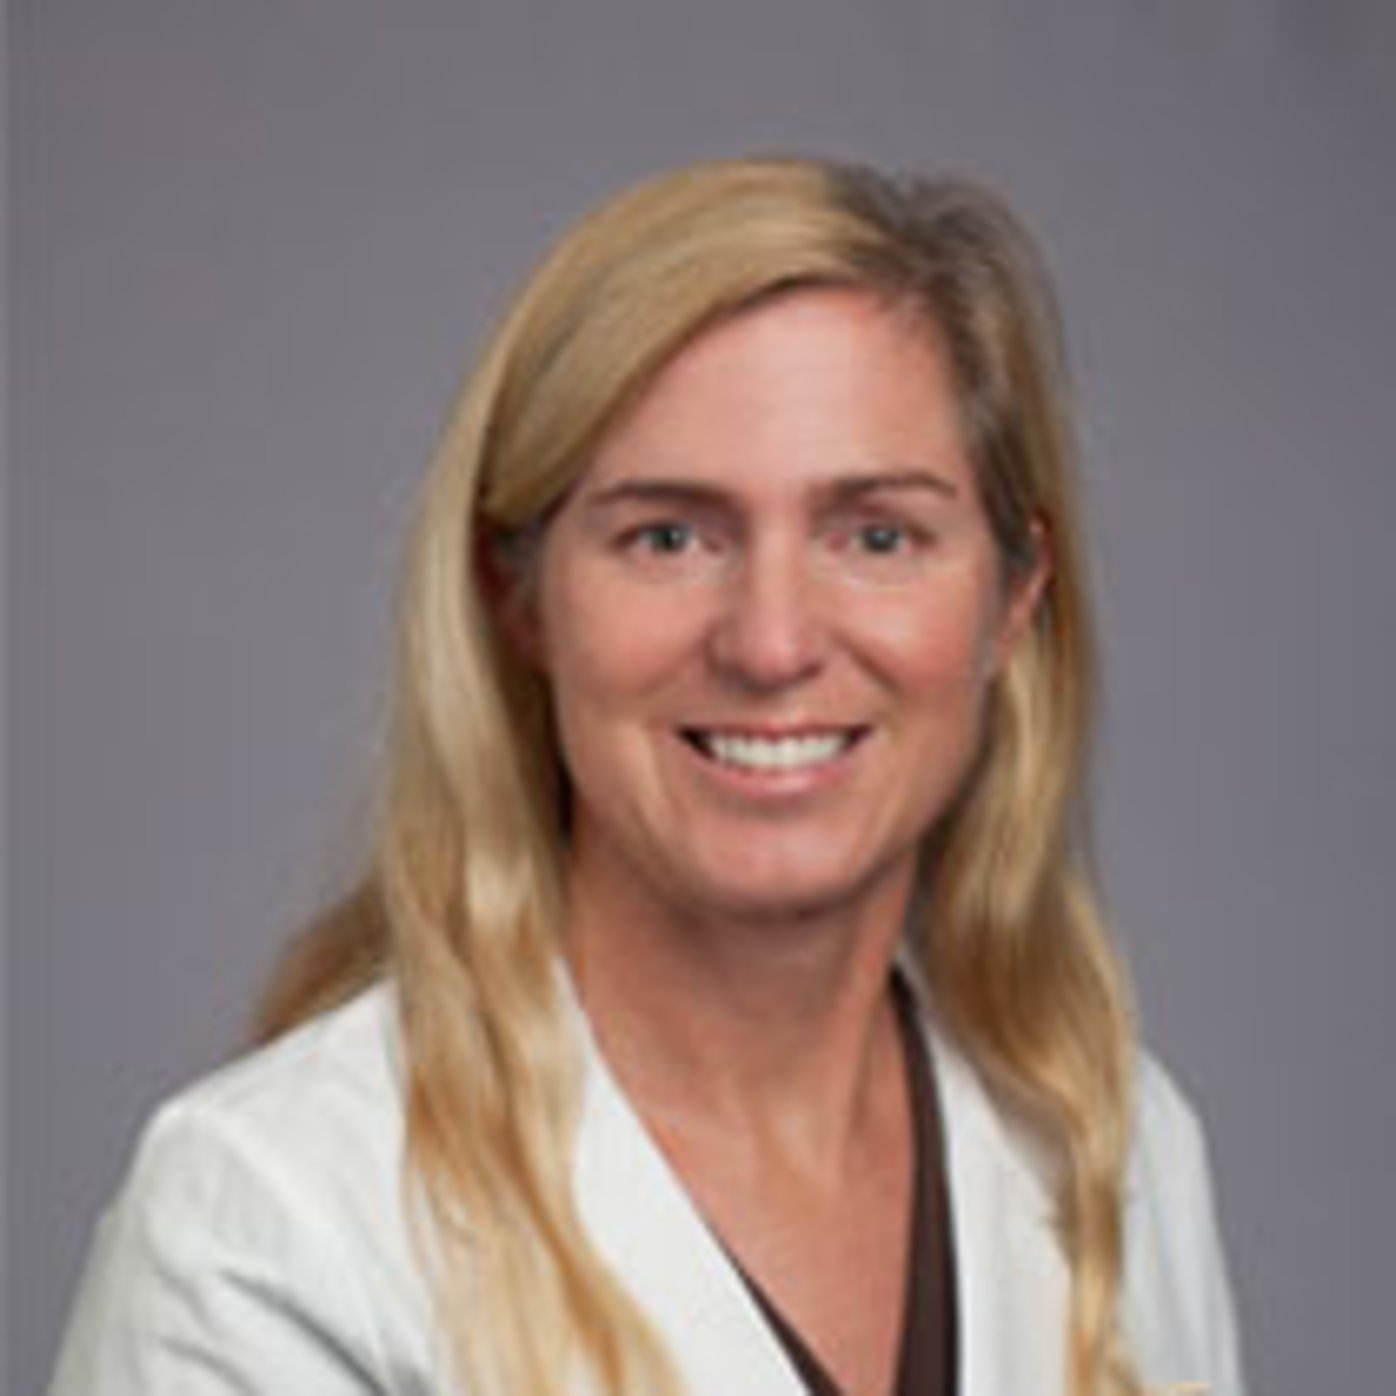 Dr. Nicole Tremain